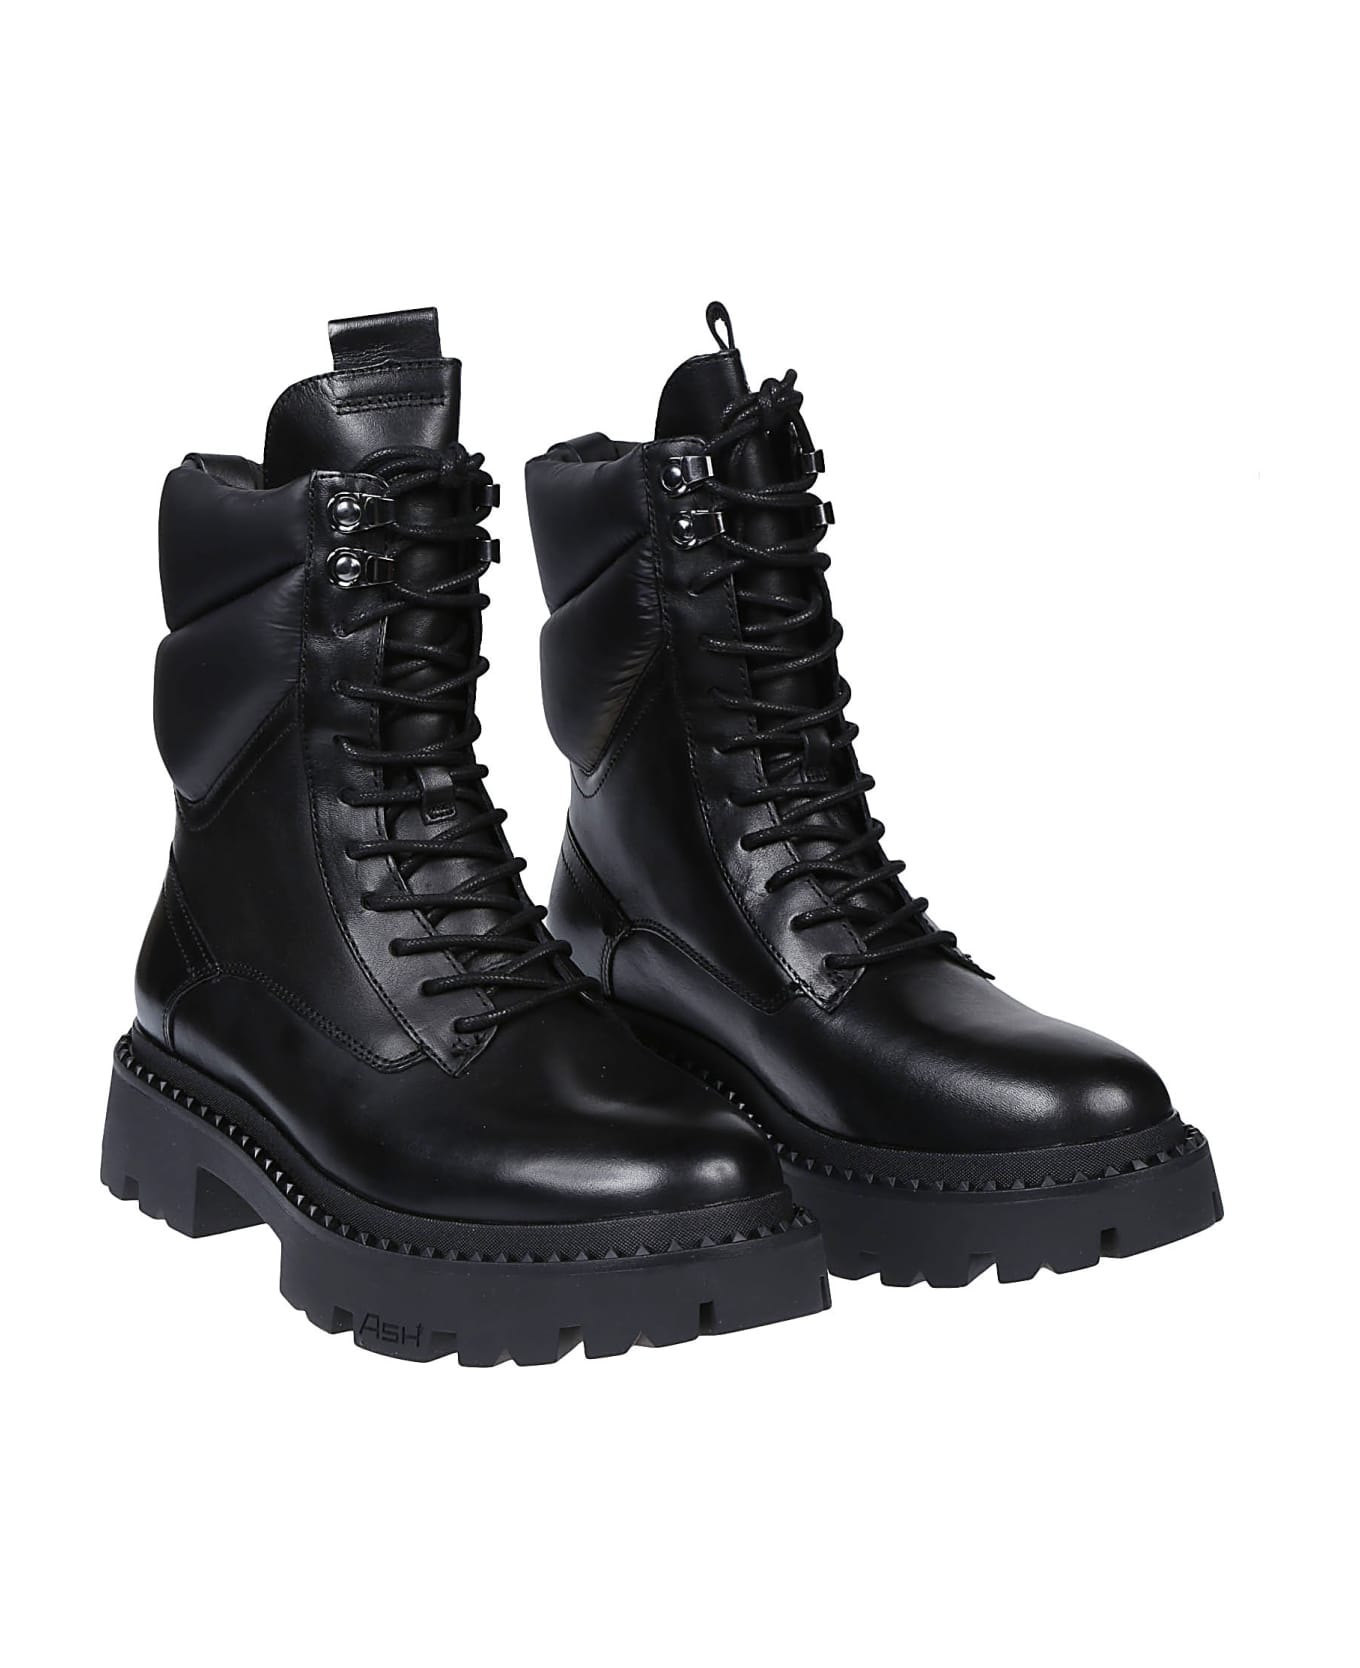 Ash Gotta Combat Ankle Boots - Black/shinypuffy Black ブーツ